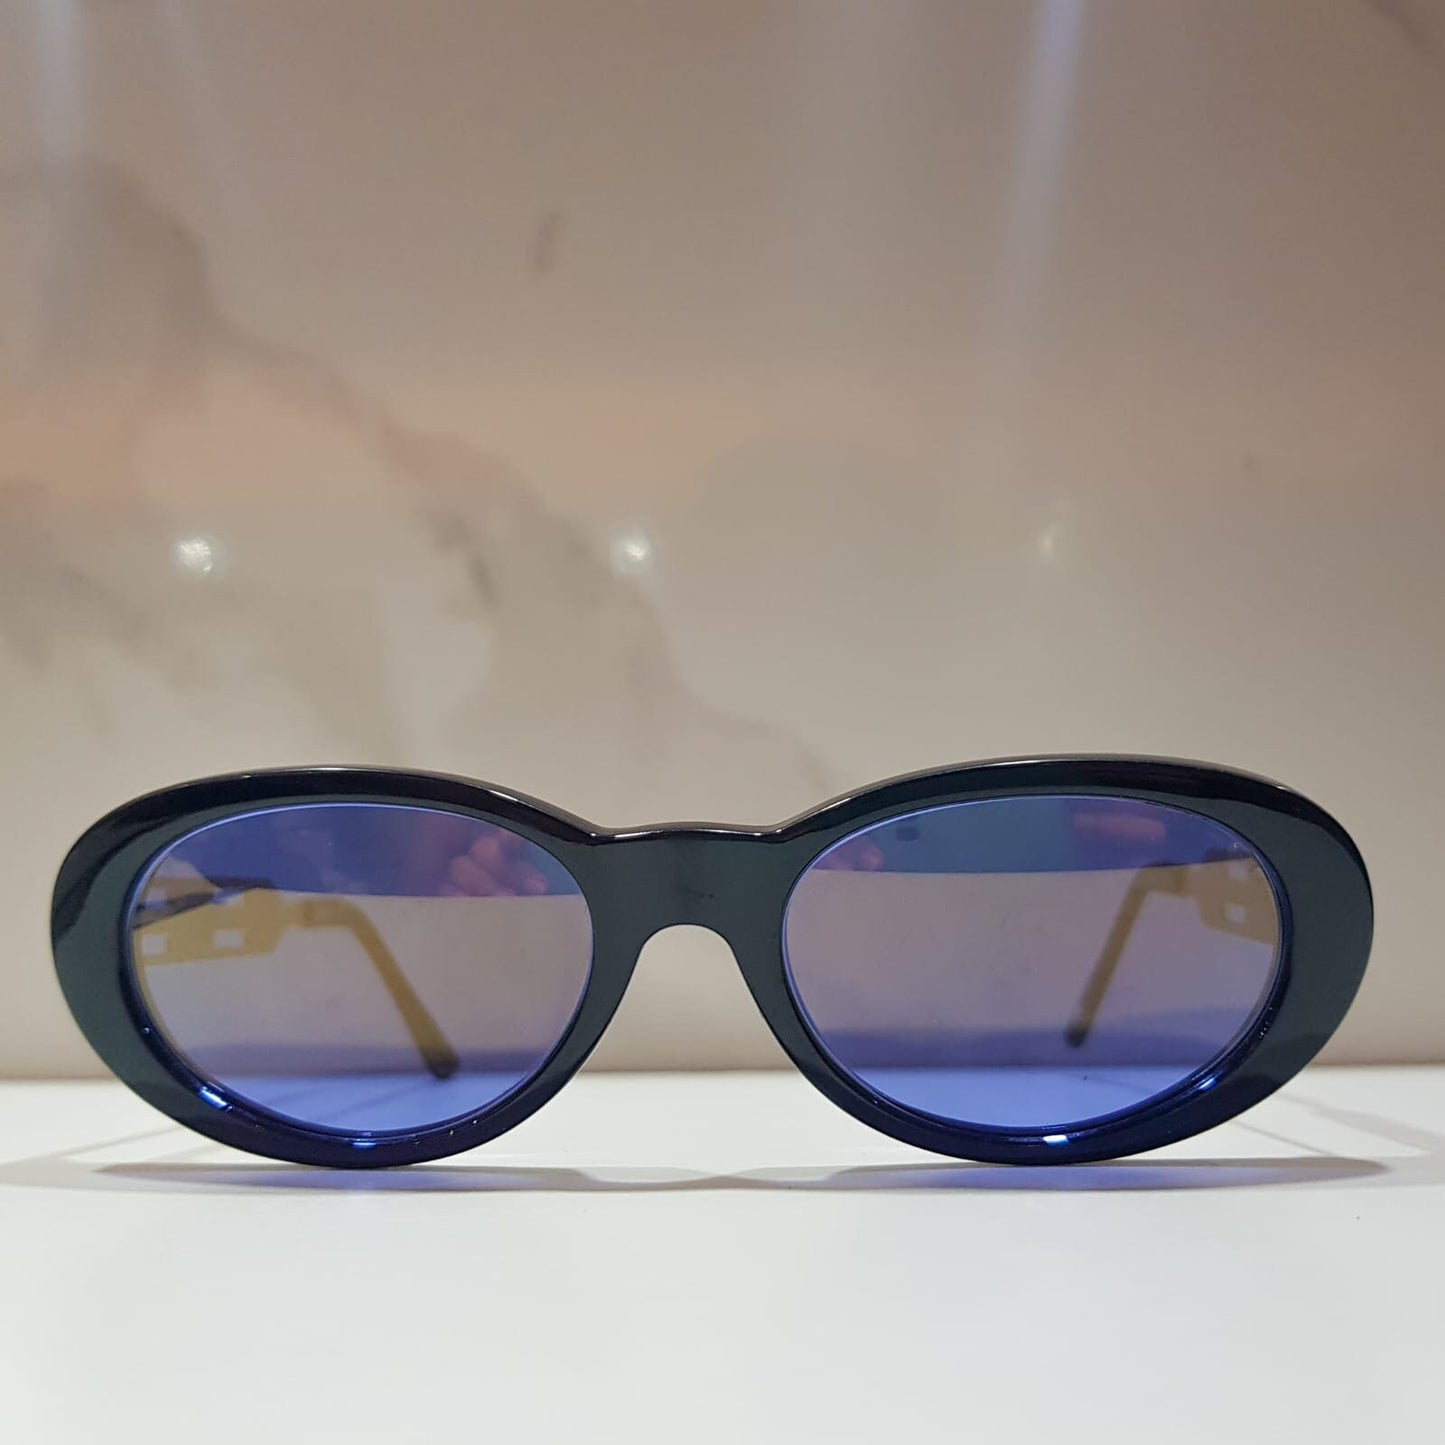 Occhiali da sole Versus Gianni Versace anni '90 occhiali lunetta brille Versace